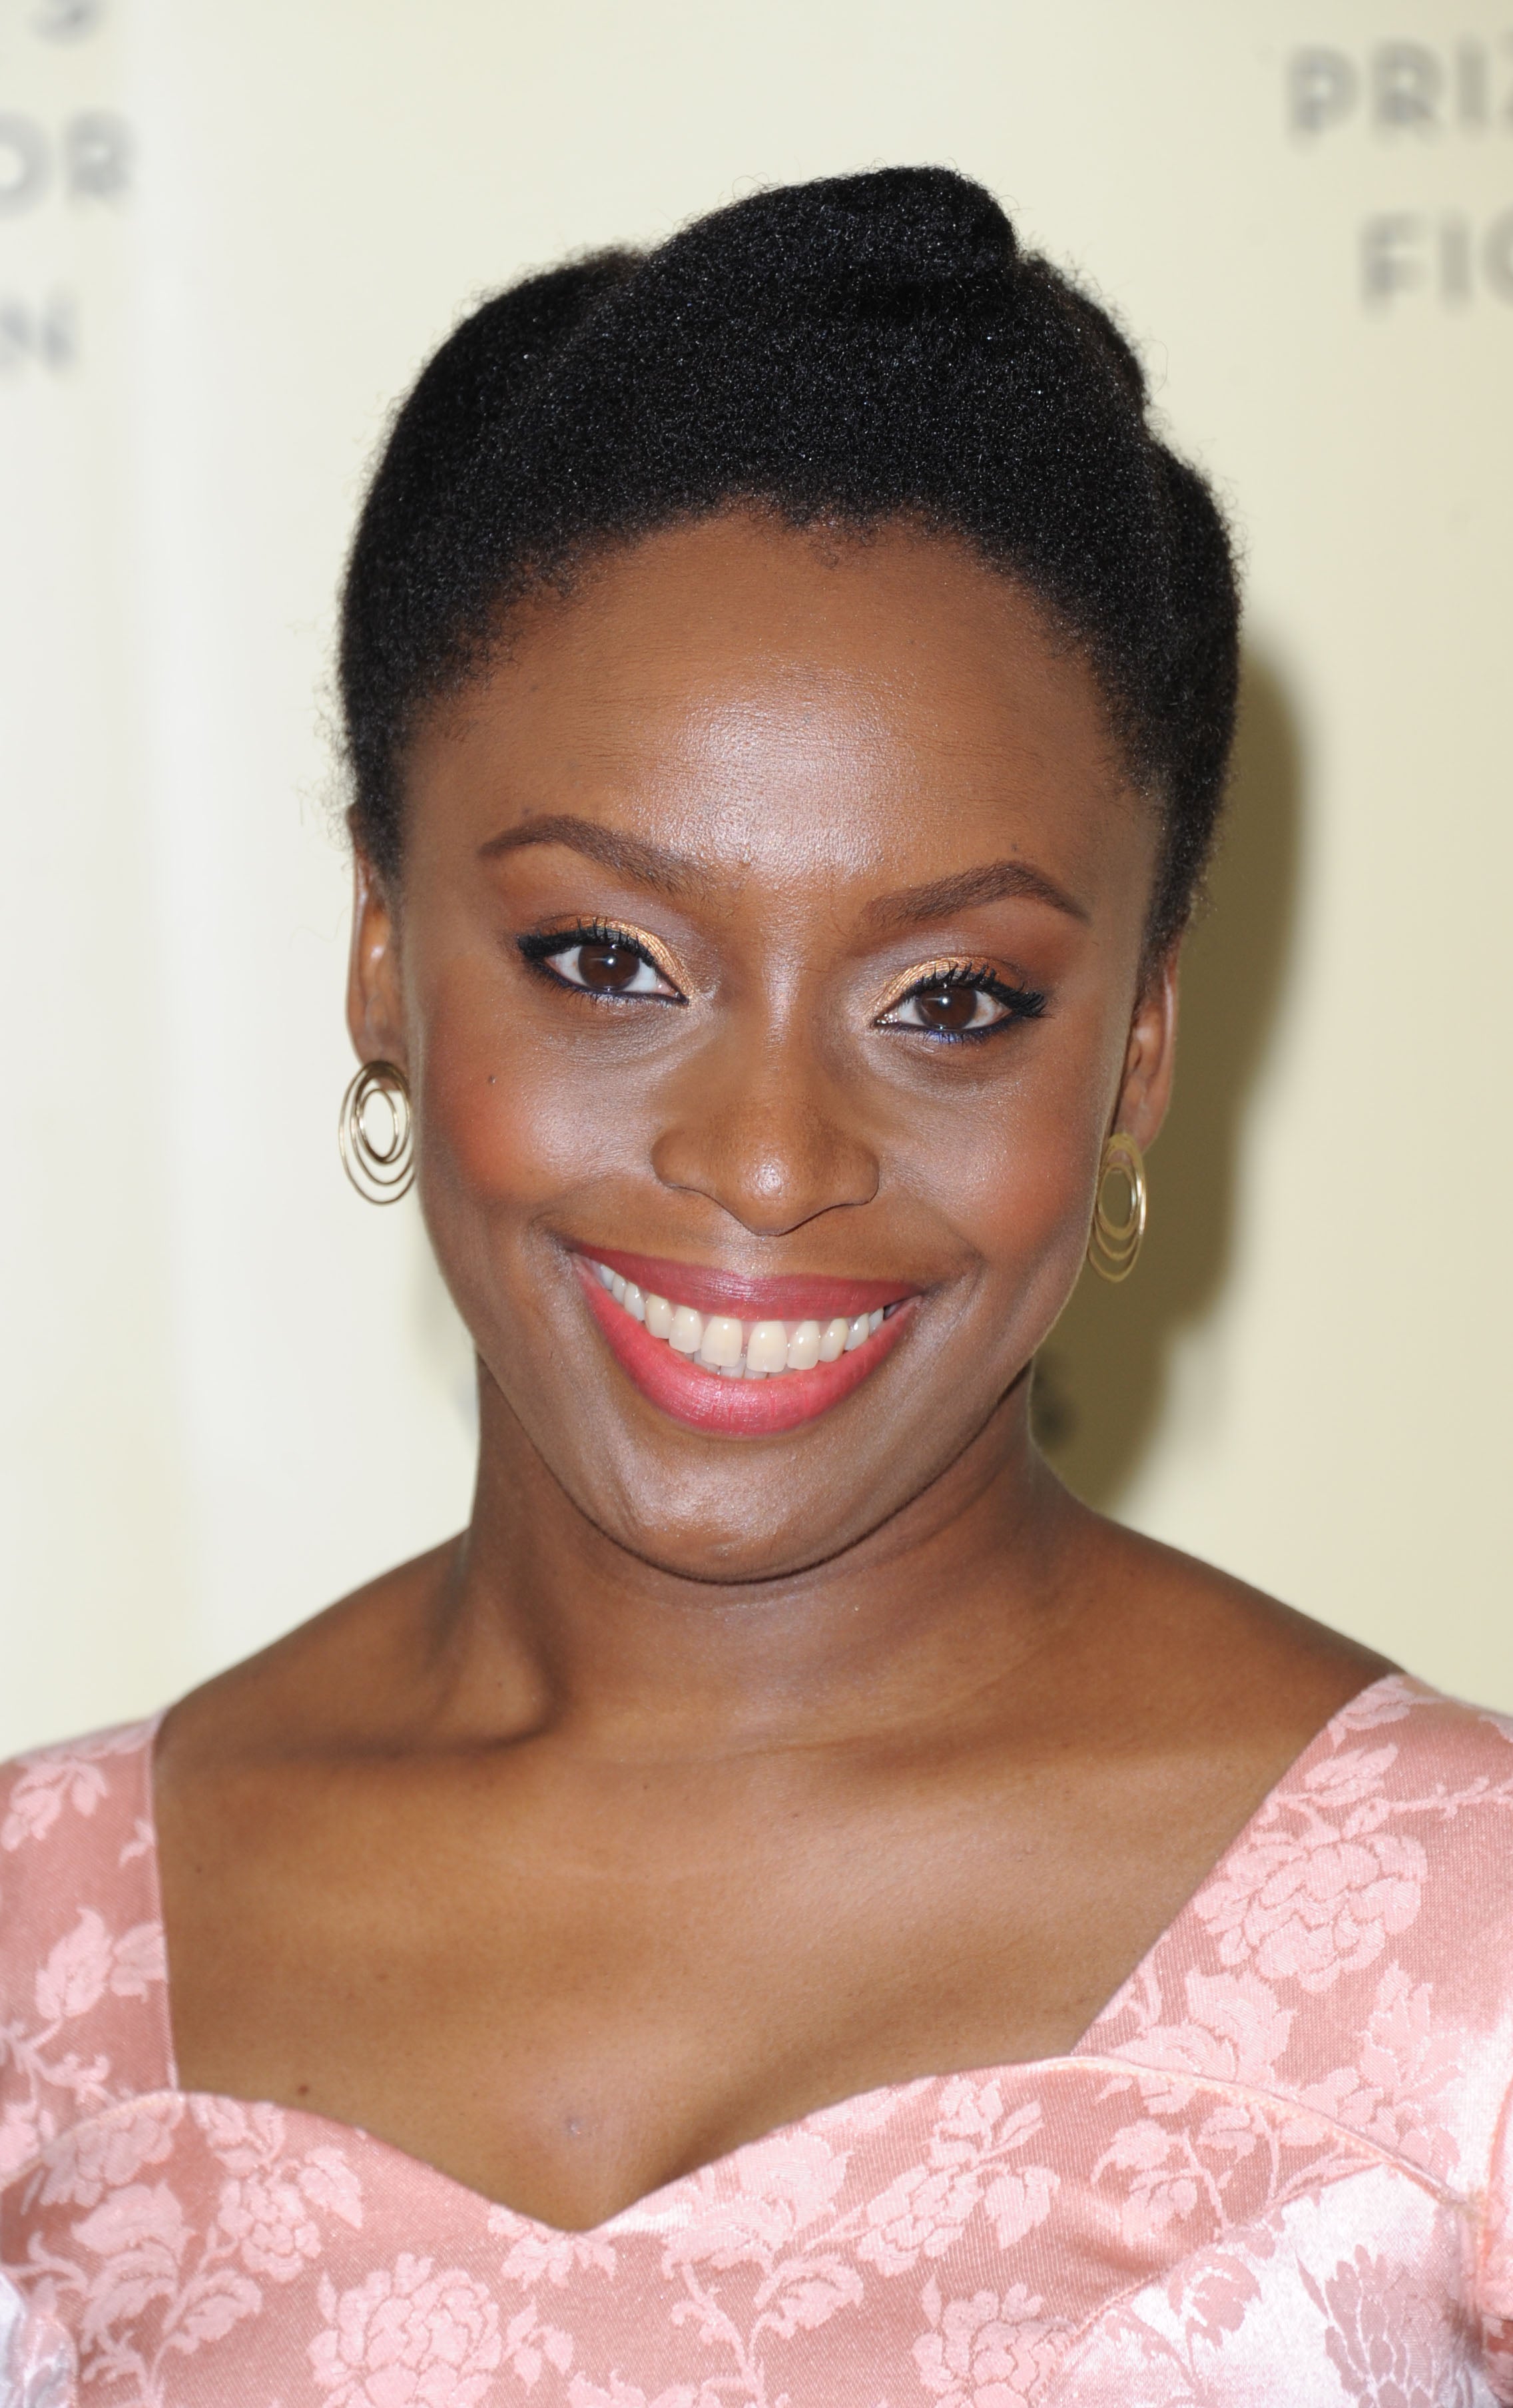 Chimamanda Ngozi Adichie Is The New Face Of British Beauty Brand Boots No7 
